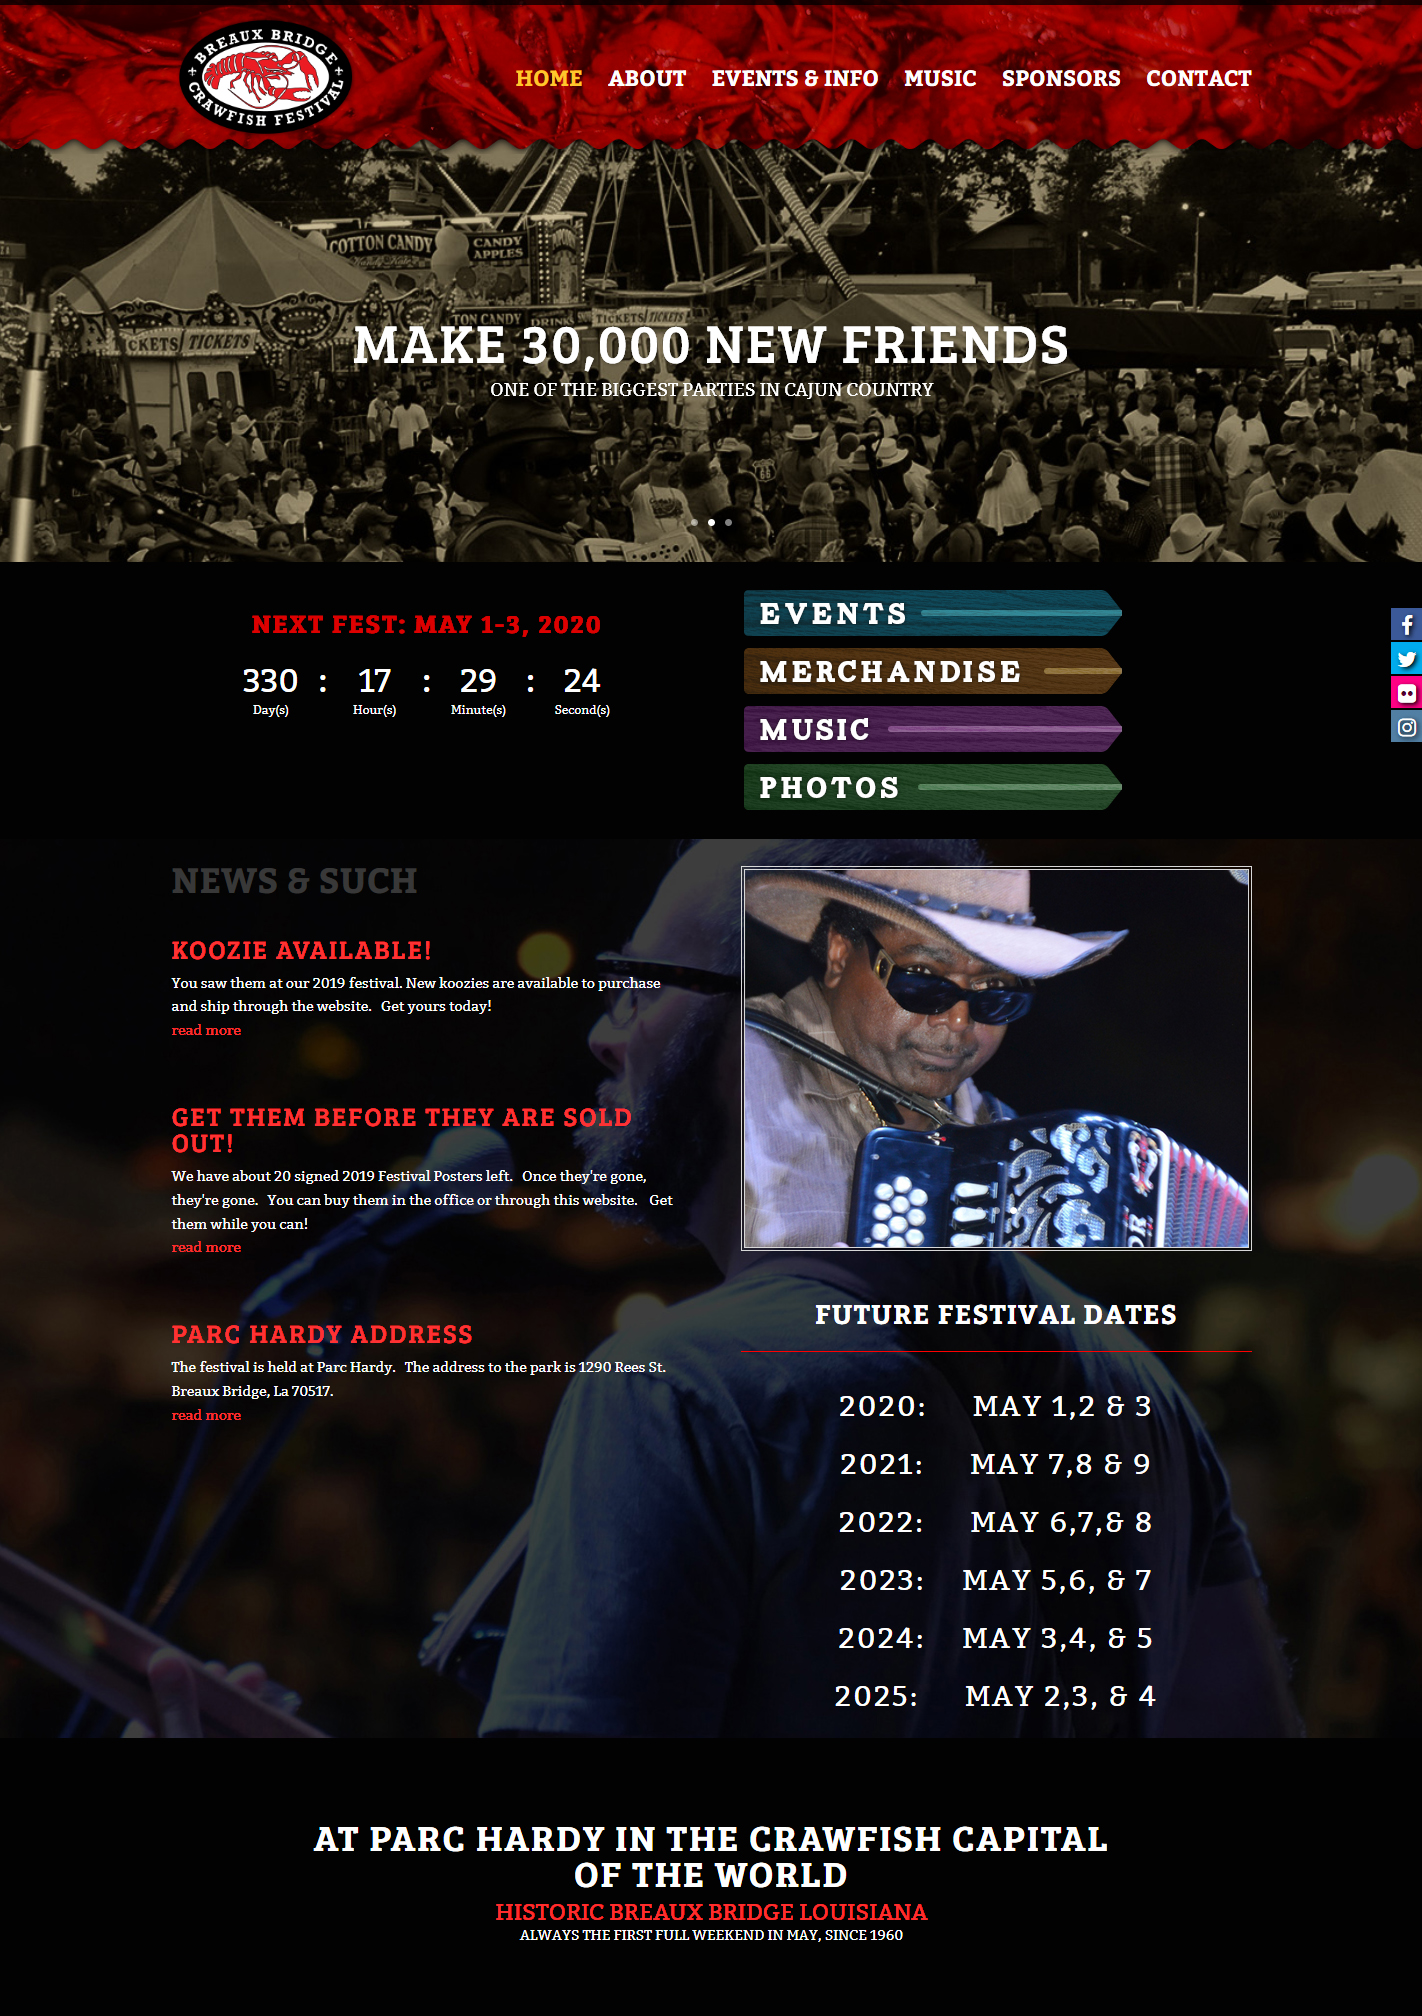 Breaux Bridge Crawfish Festival web design screenshot for an event in Lafayette LA